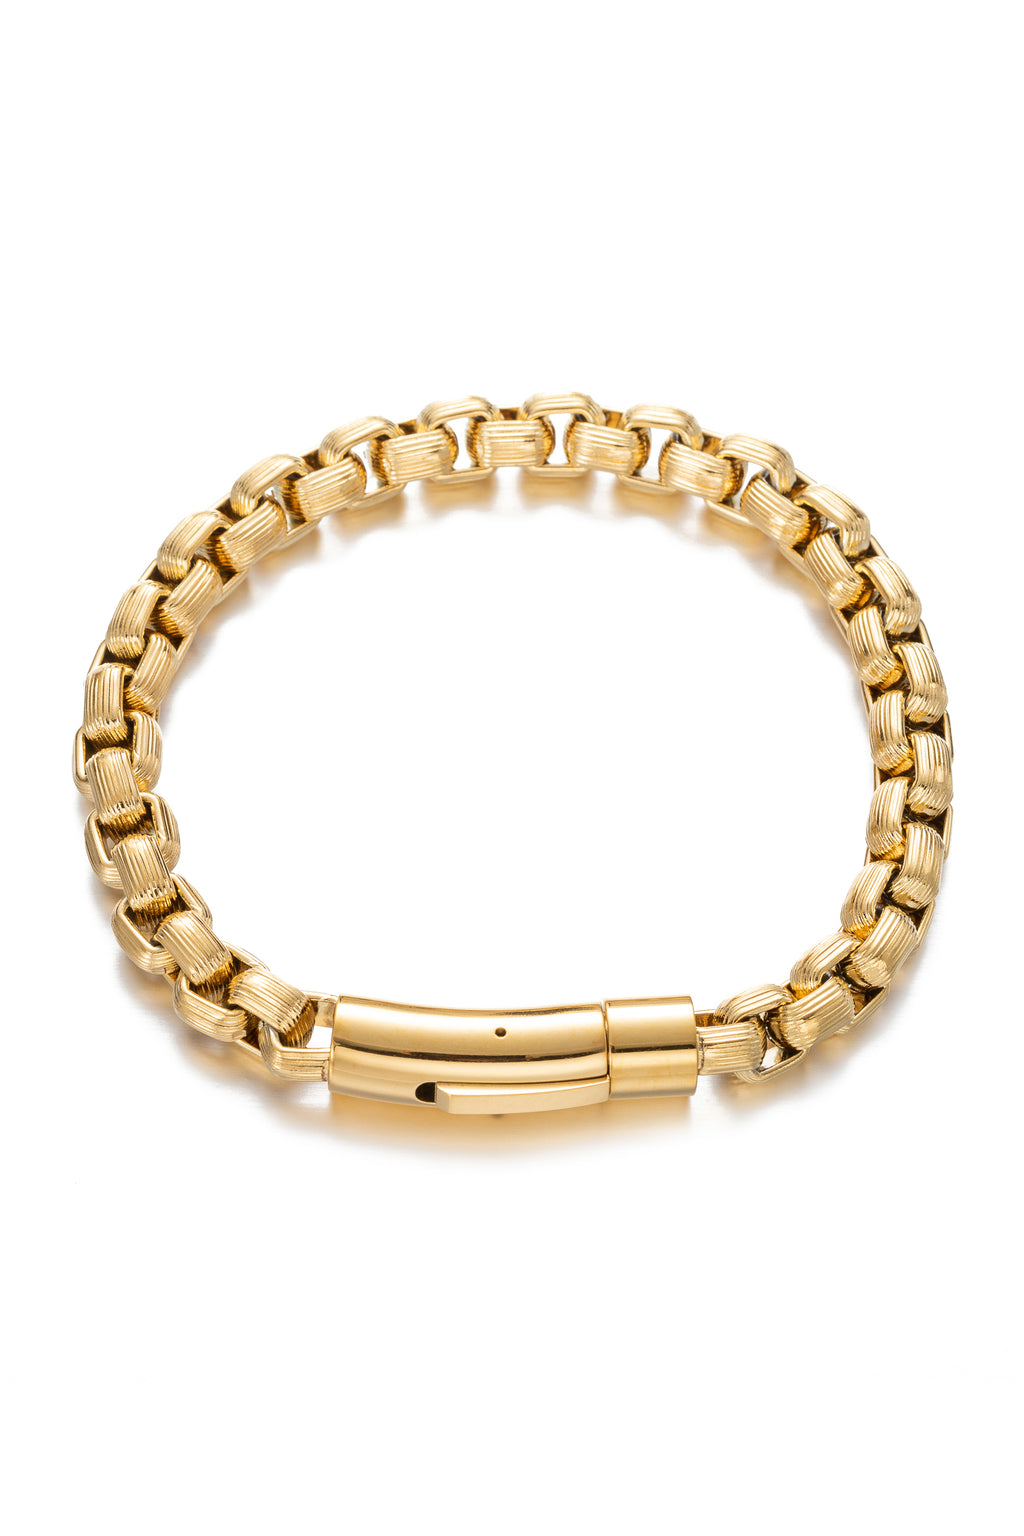 18k gold plated braided titanium bracelet.